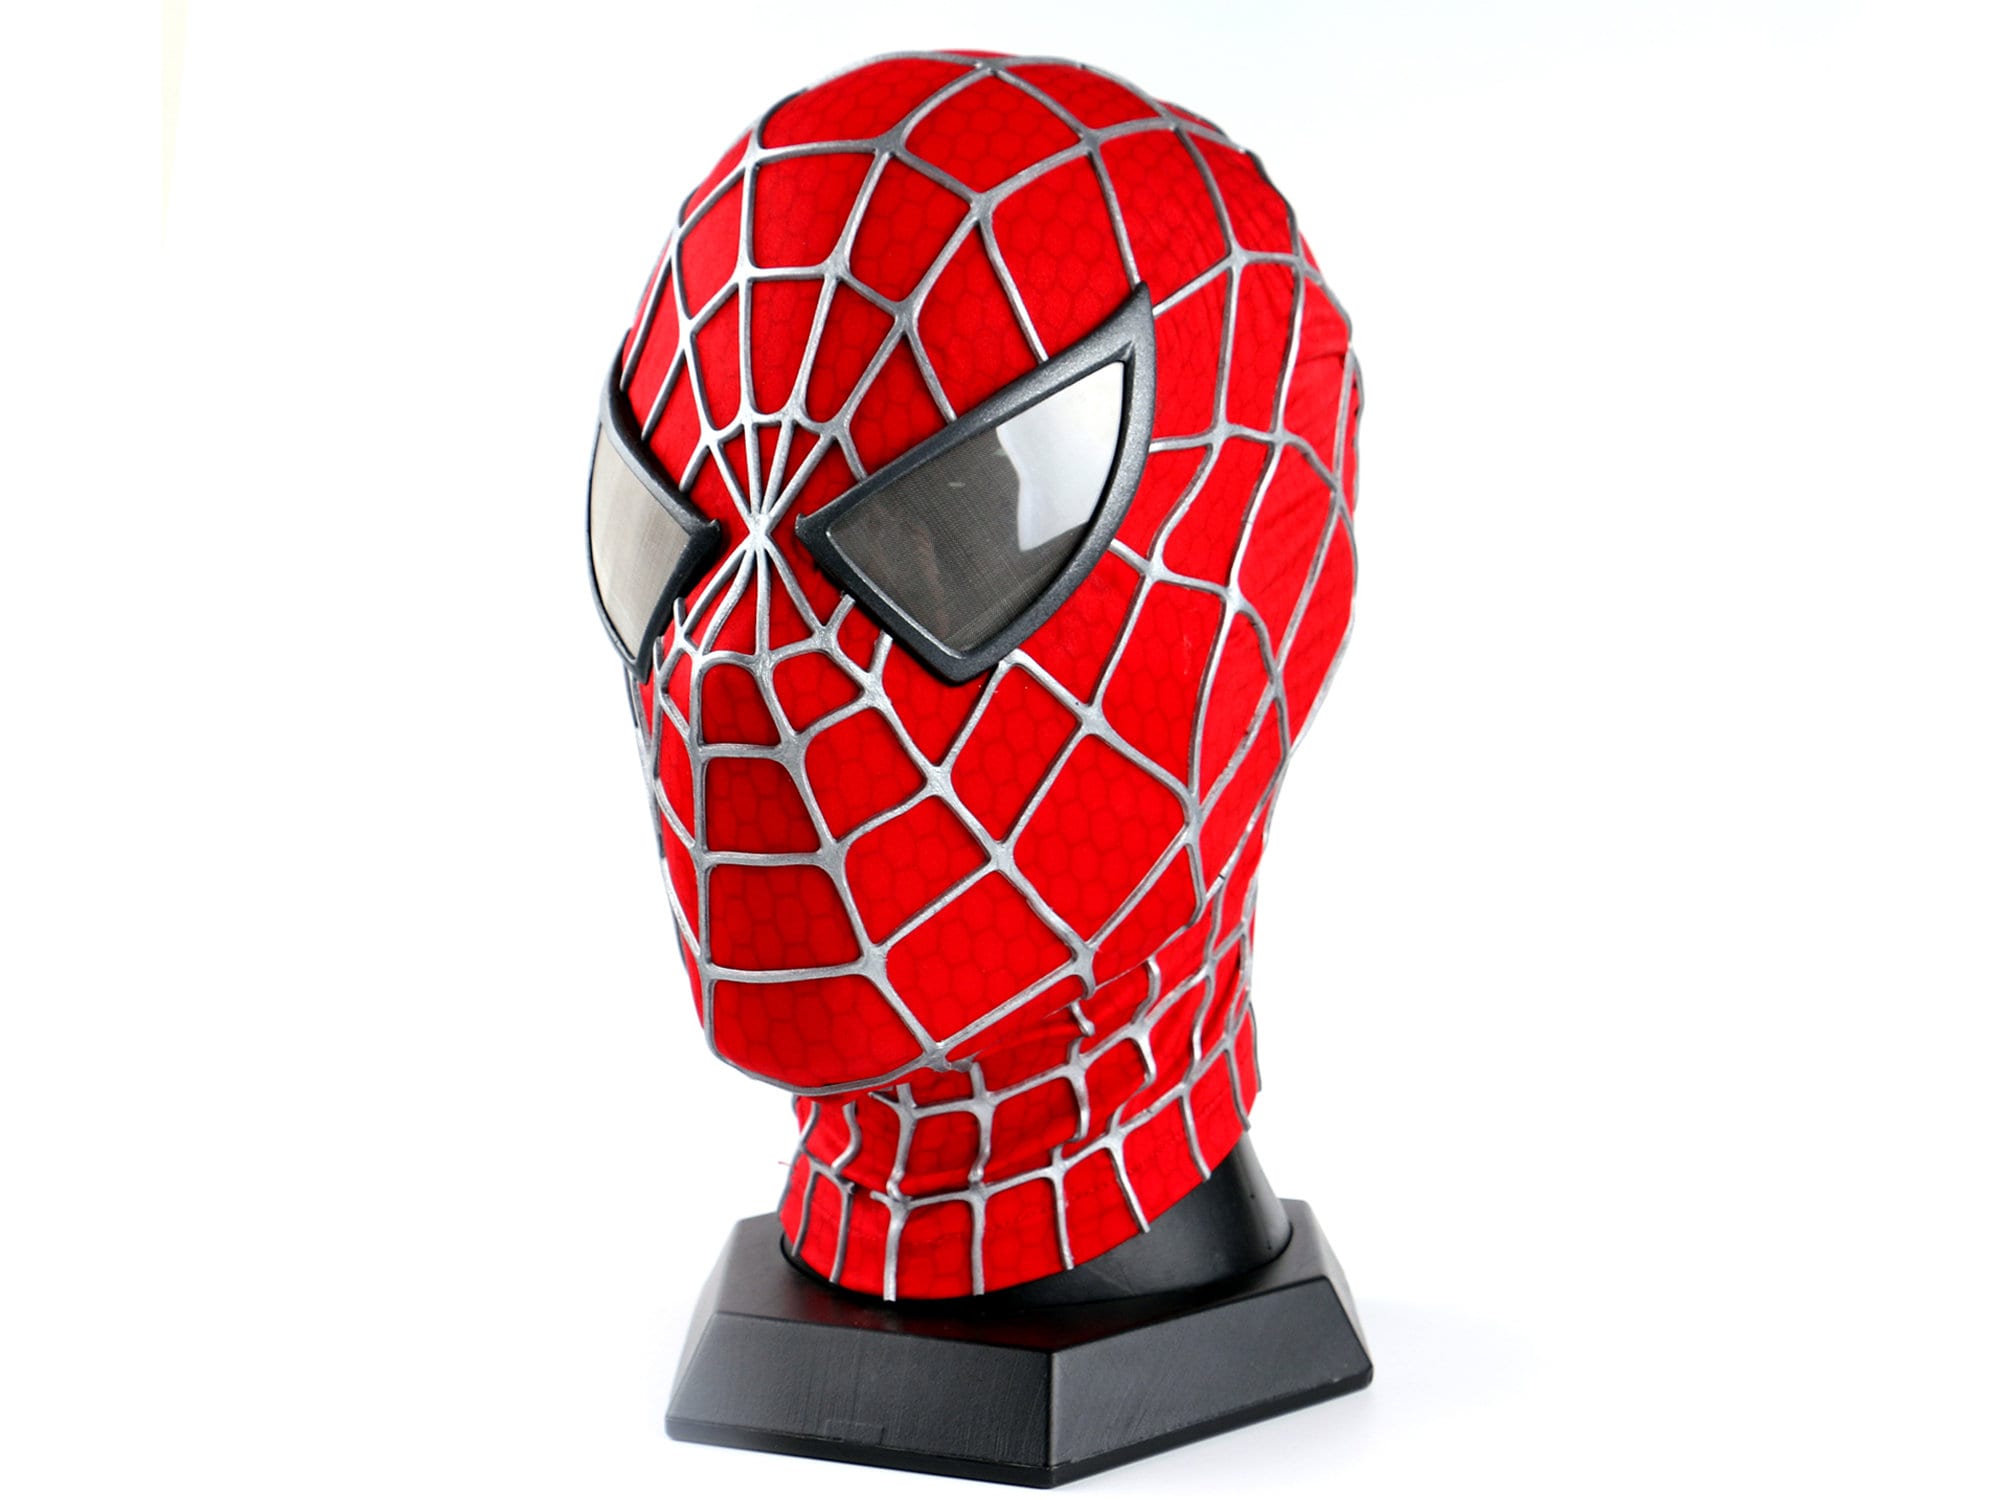 Masque Spiderman noir Cosplay Sam Raimi masque Spiderman adultes